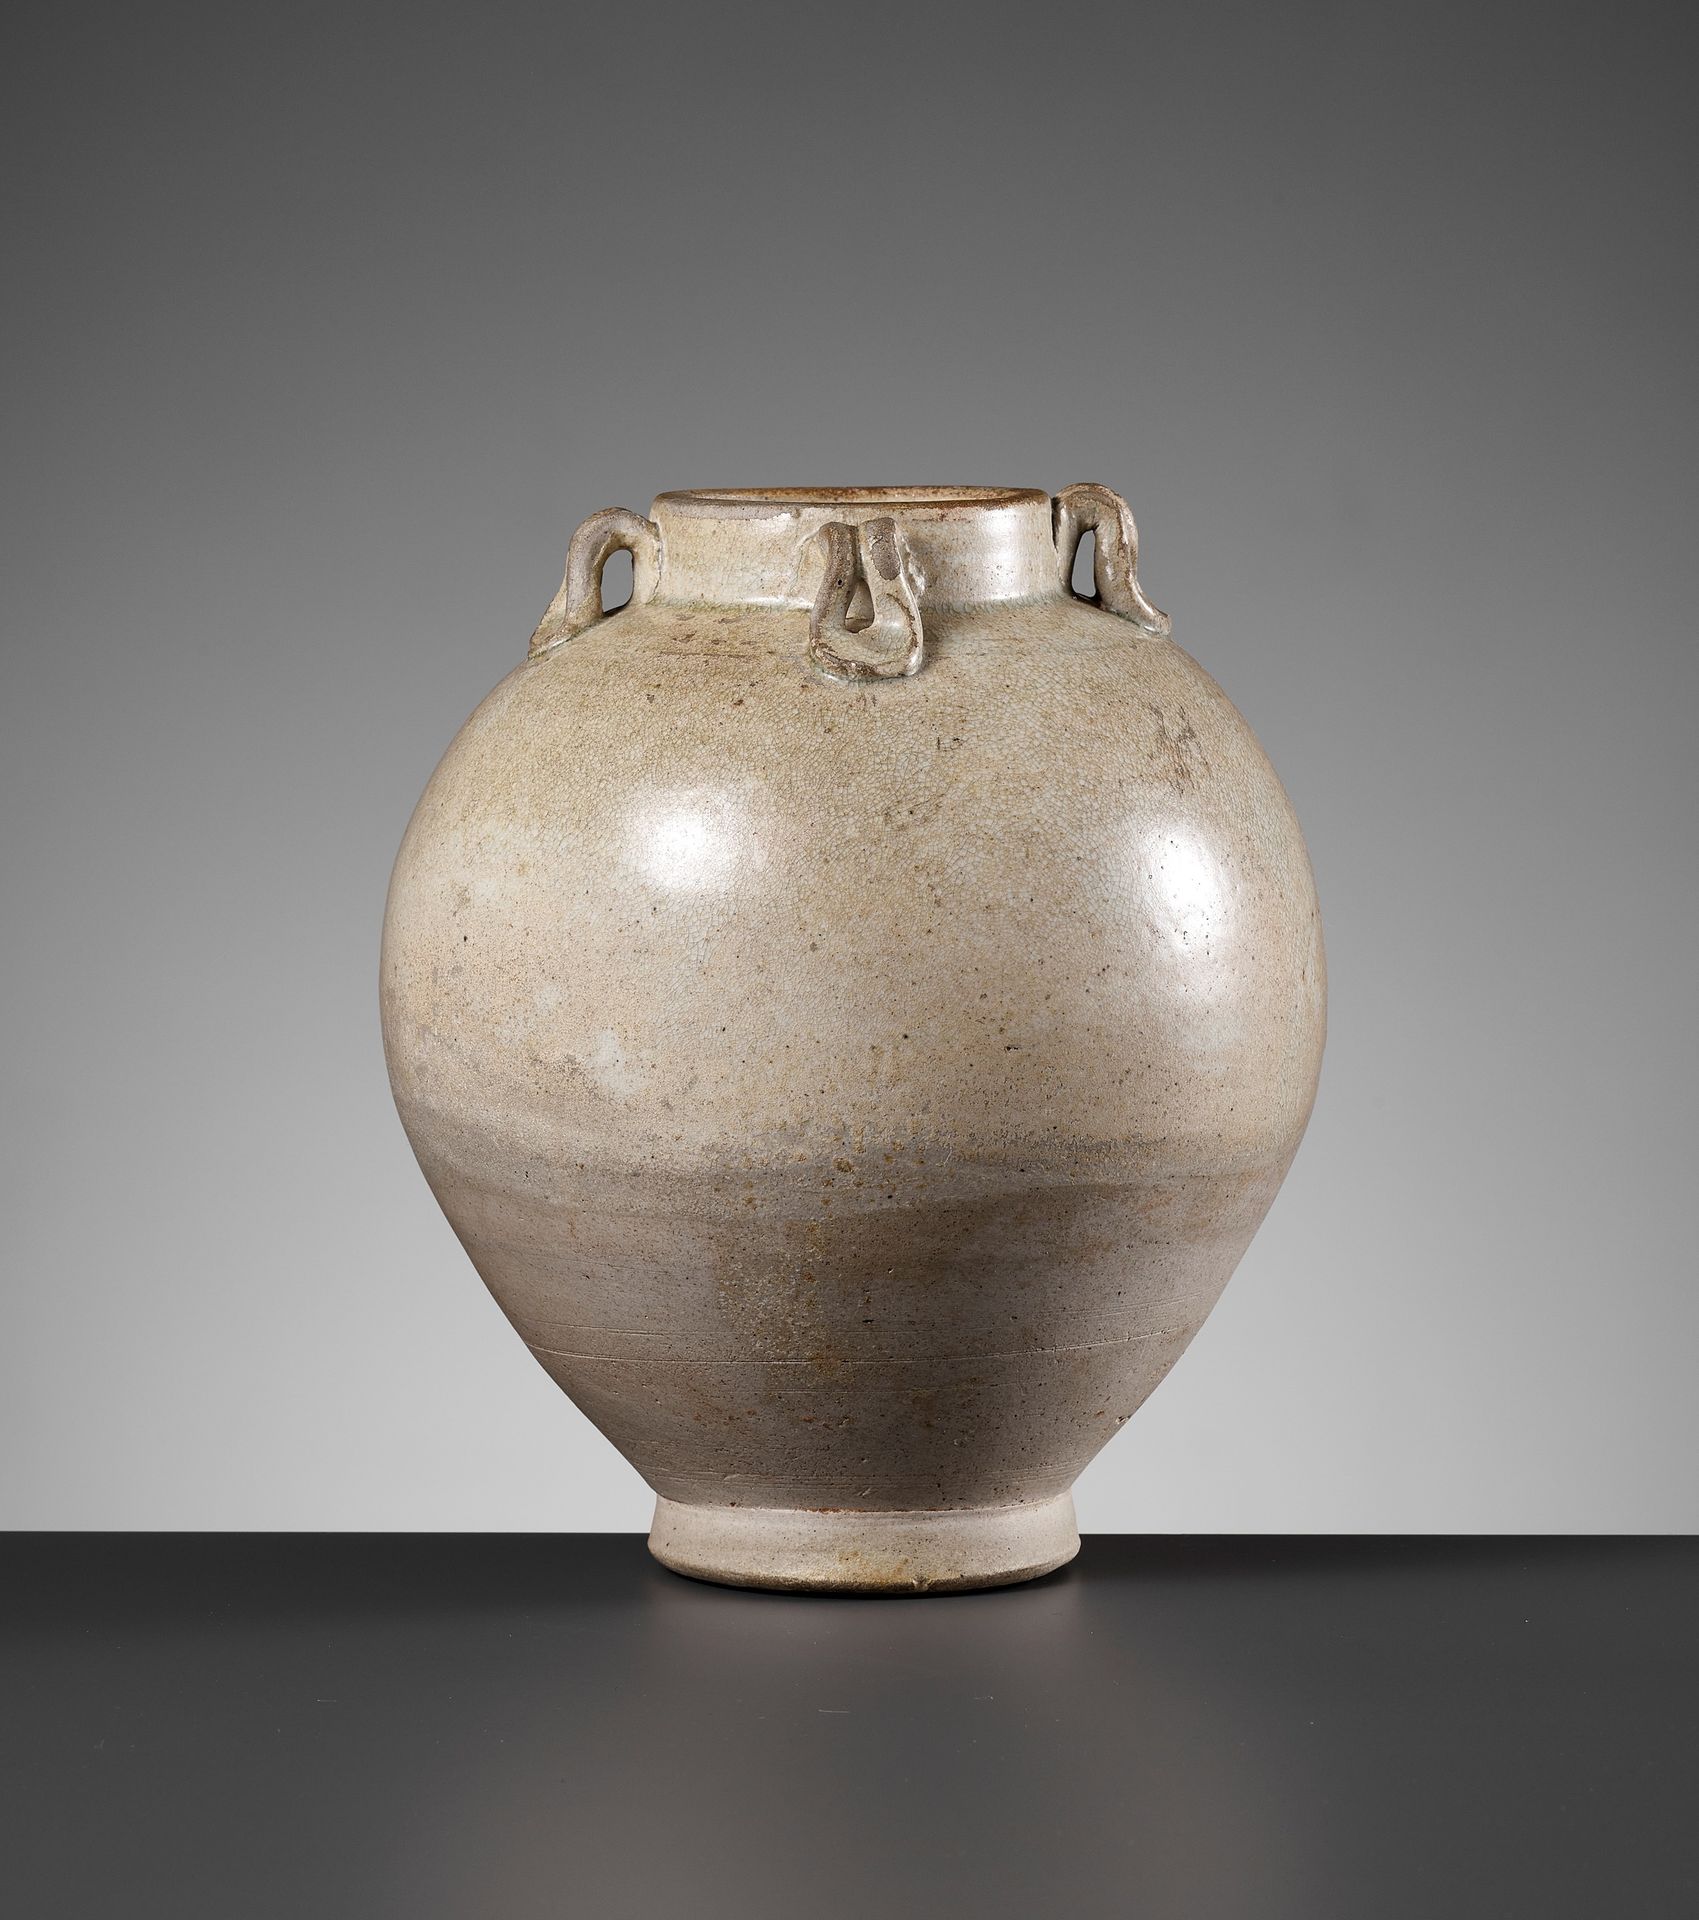 A CELADON-GLAZED JAR, SUI TO TANG DYNASTY 瓷釉罐，徐州唐代
中国，581-907。巨大的罐状球状器从一个圆形的匍匐底向&hellip;